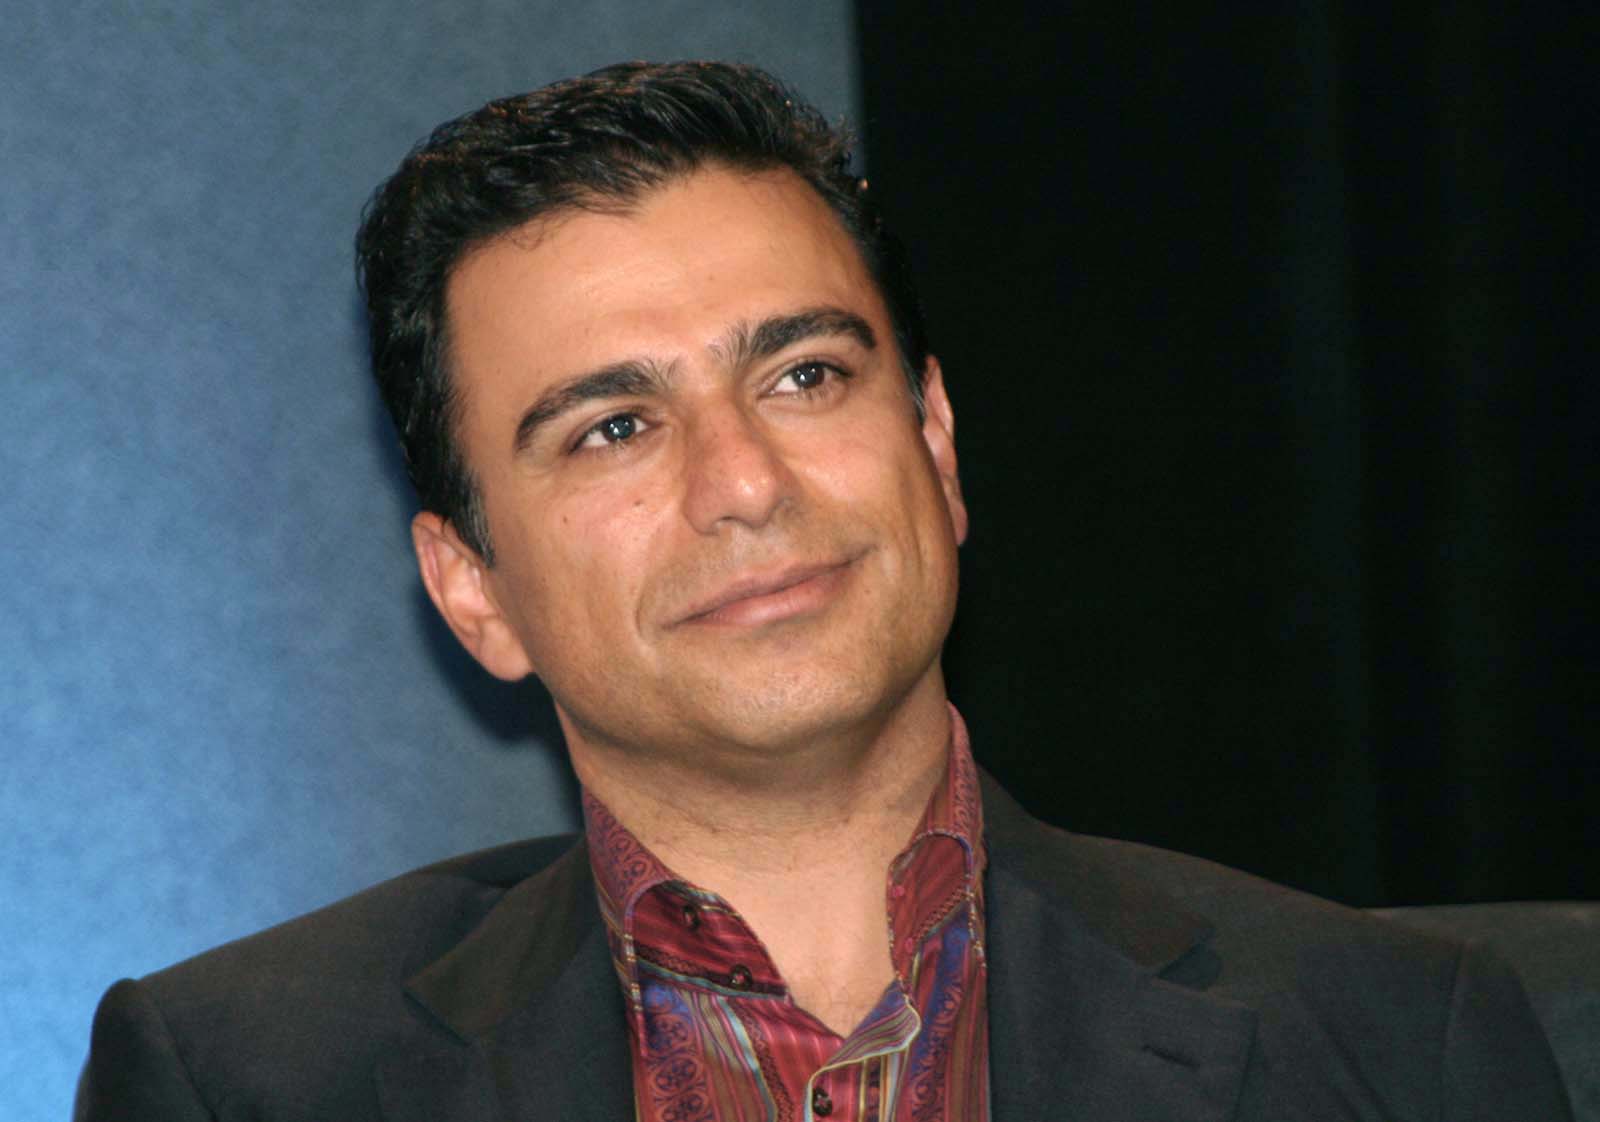 Omid Kordestani. Photo credit: commons.wikimedia.org